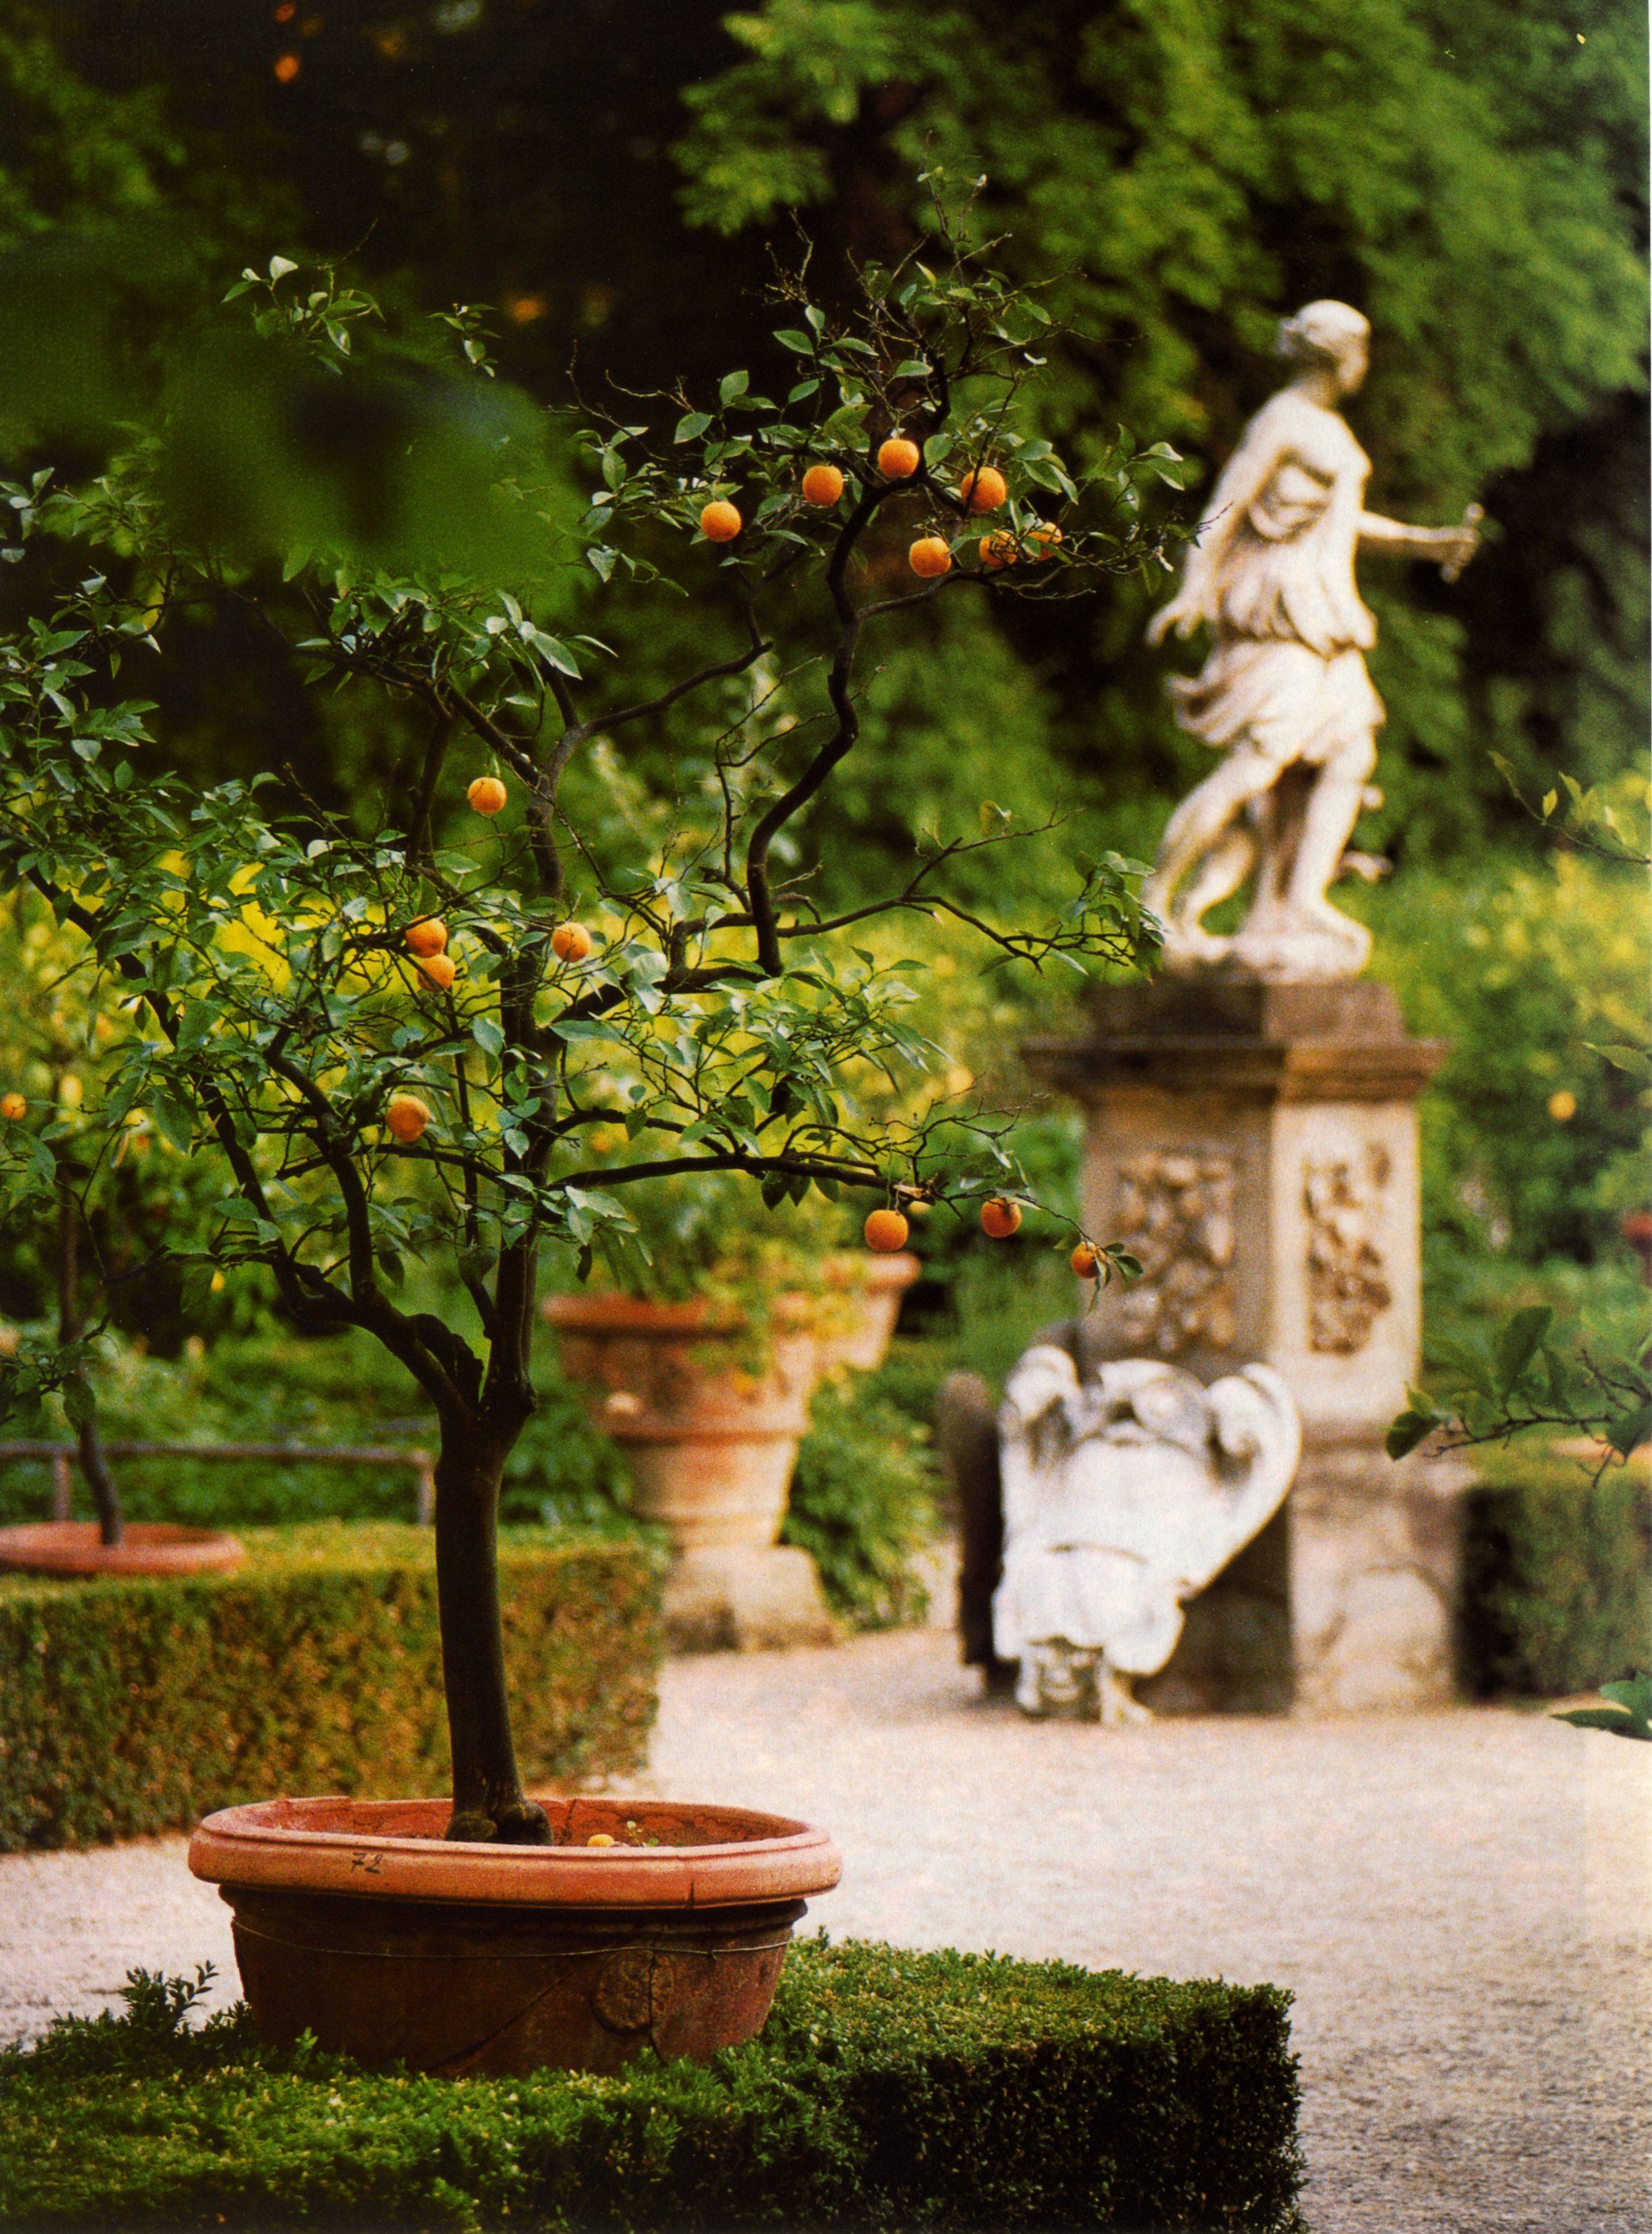 The Italian Renaissance Garden An Iconic Famous Gardens